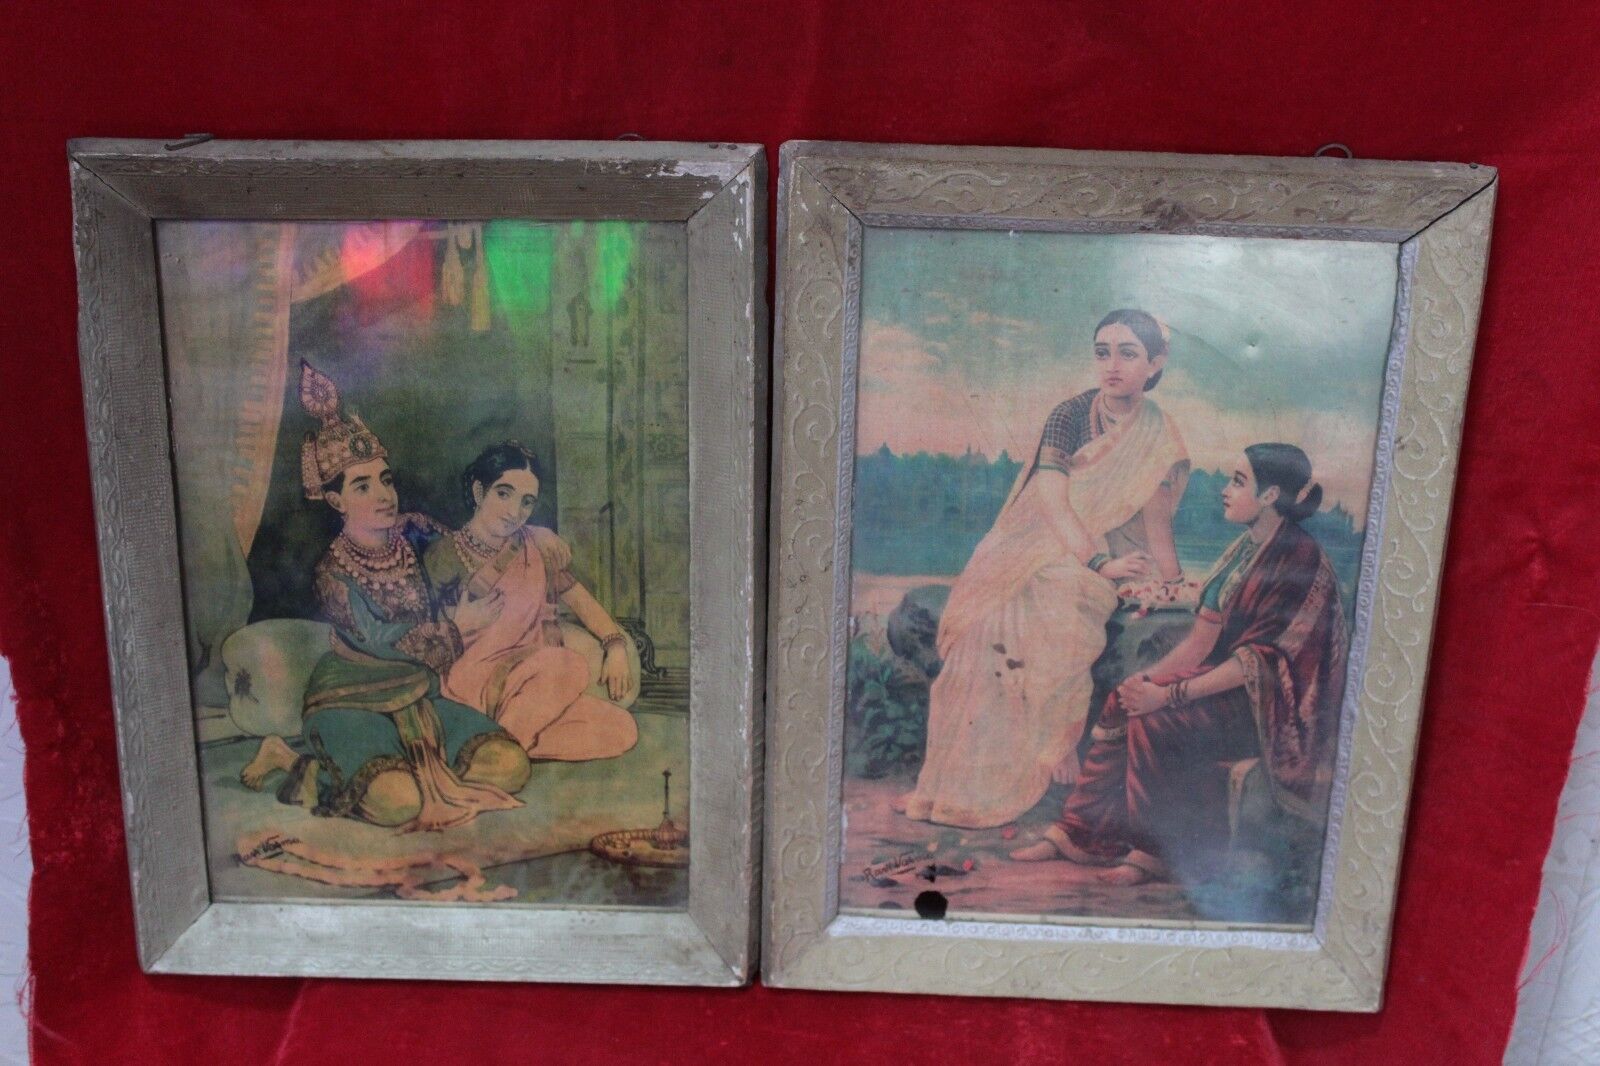 2 Pc Photo Frame Vintage Ravi Varma Sign Press Litho Print Home Wall Decor PG-74